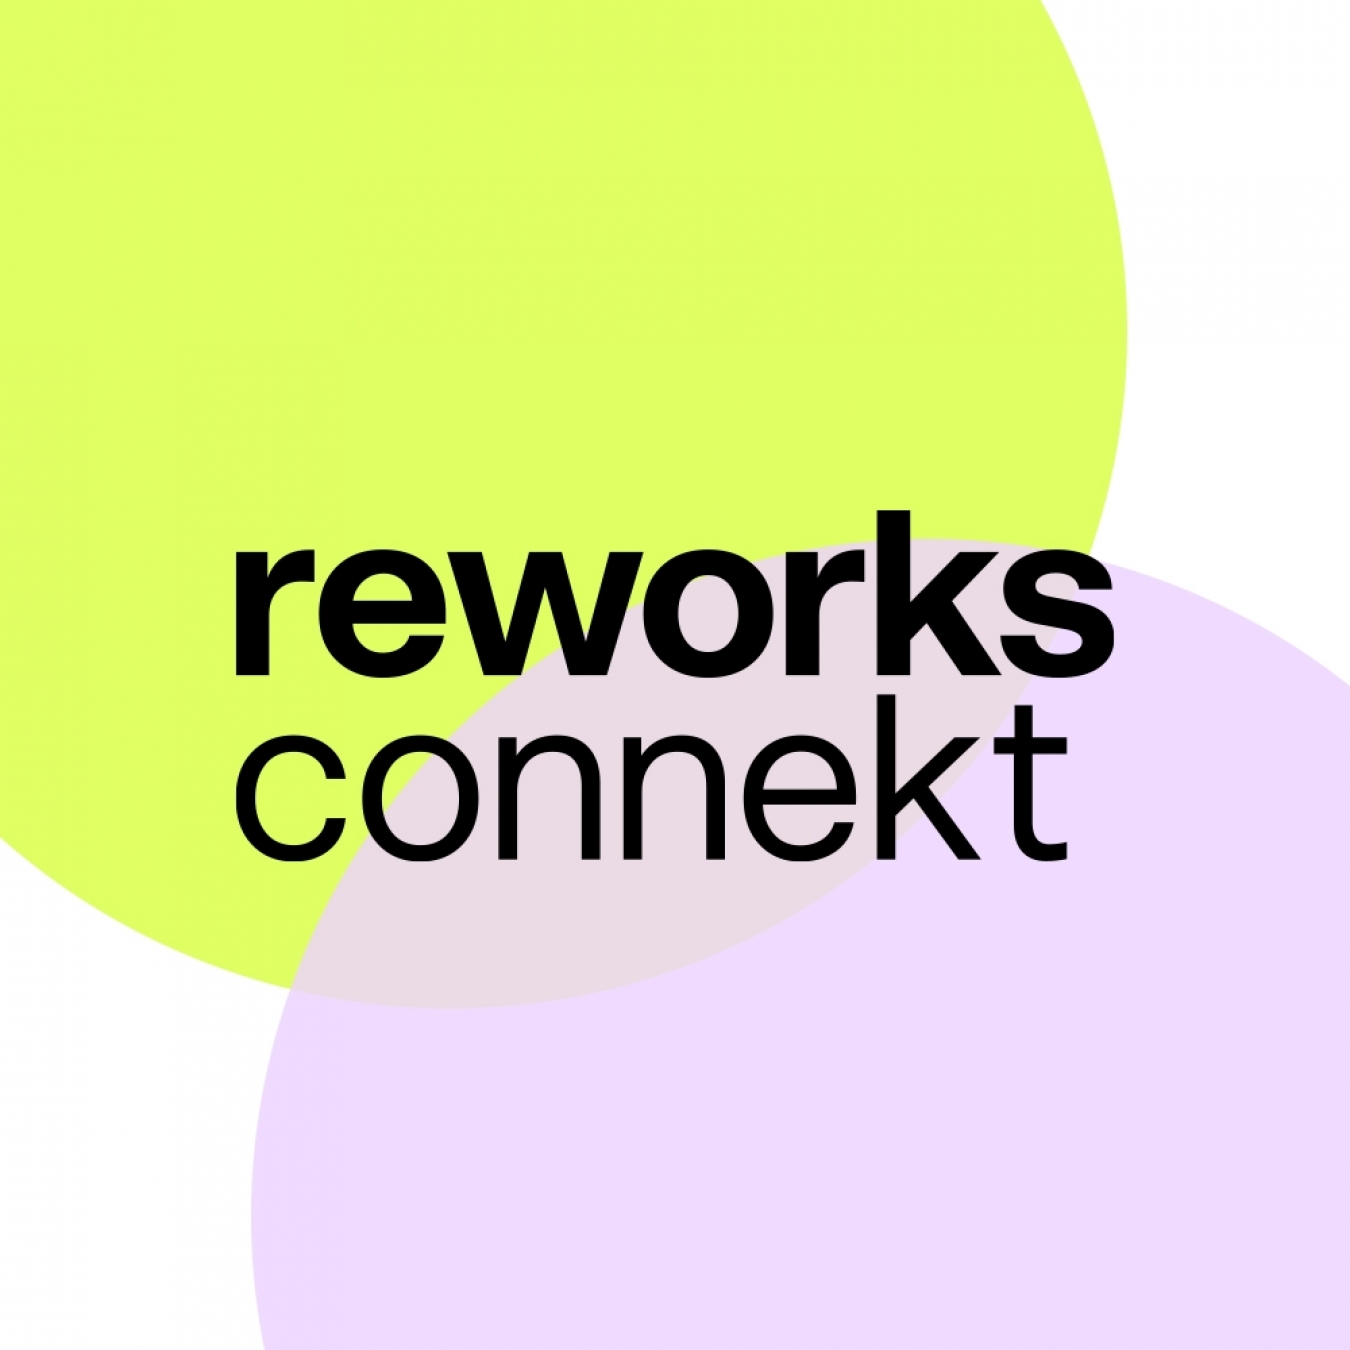 Reworks Connekt: Μια ανατρεπτική ψηφιακή εμπειρία